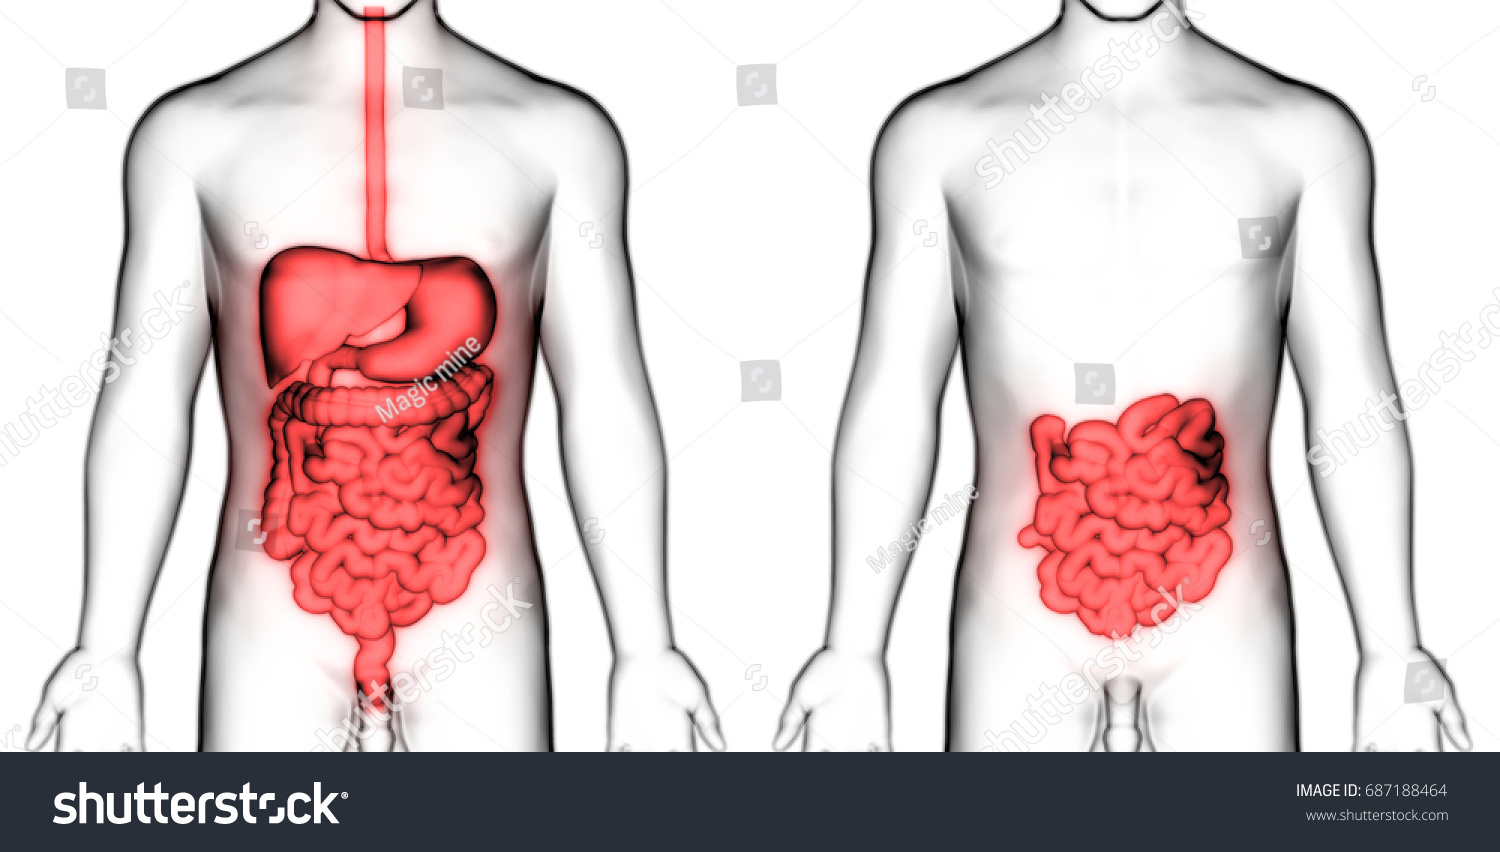 Human Digestive System Anatomy Small Intestine Stock Illustration 687188464 Shutterstock